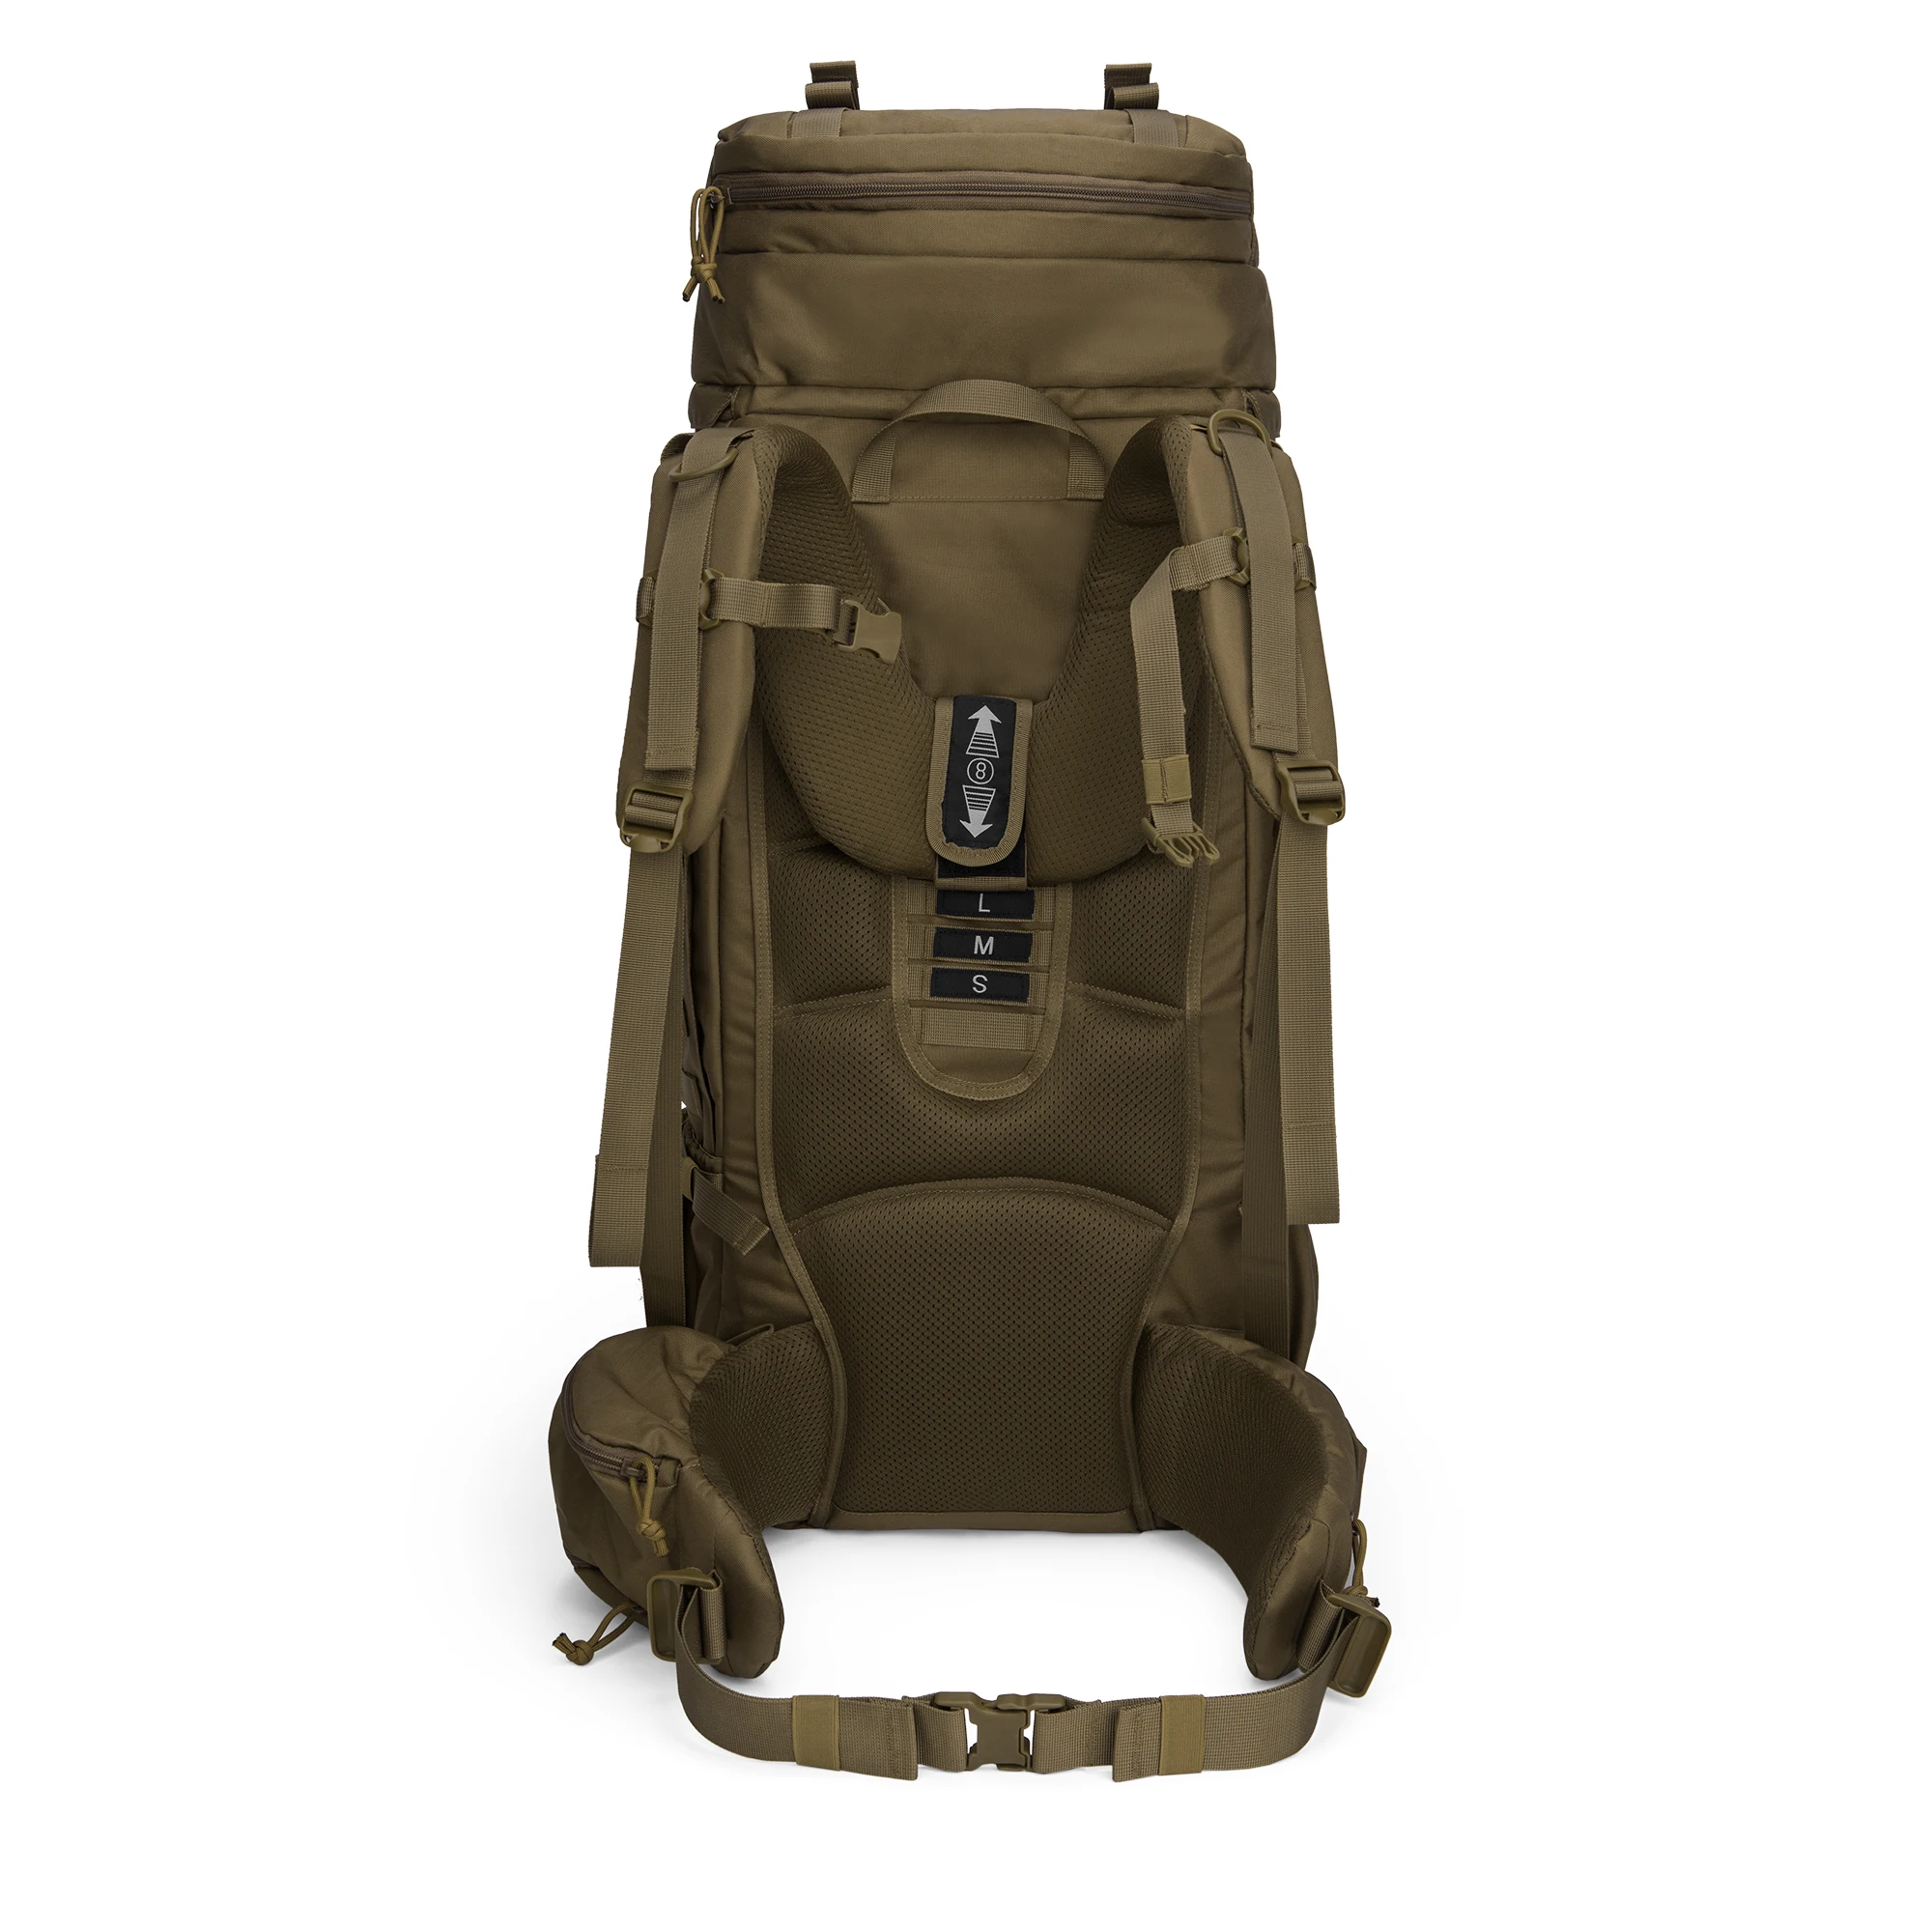 Тактический алиэкспресс. Mardingtop 25l/28l/з5l Tactical Backpack. Mardingtop Tactical Backpack. ALIEXPRESS Military Drone.